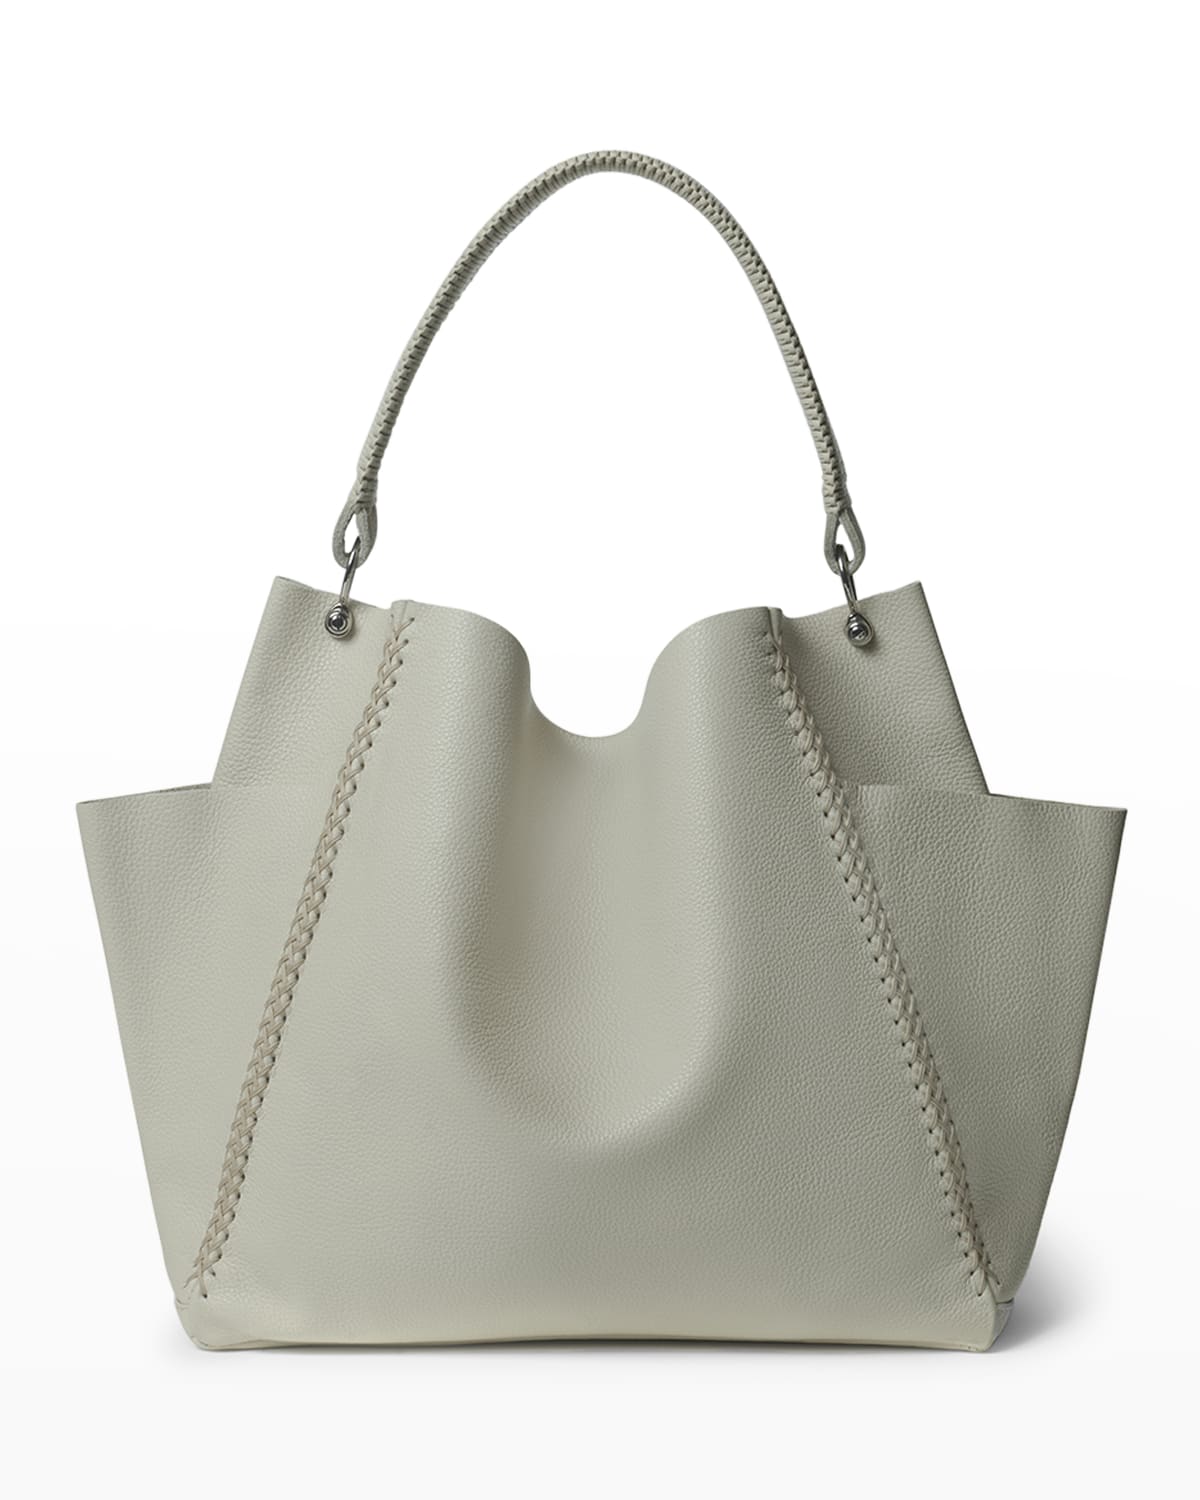 LeahWard Women's Shoulder Bags With Front Pocket Quality Shopper Tote Bag 